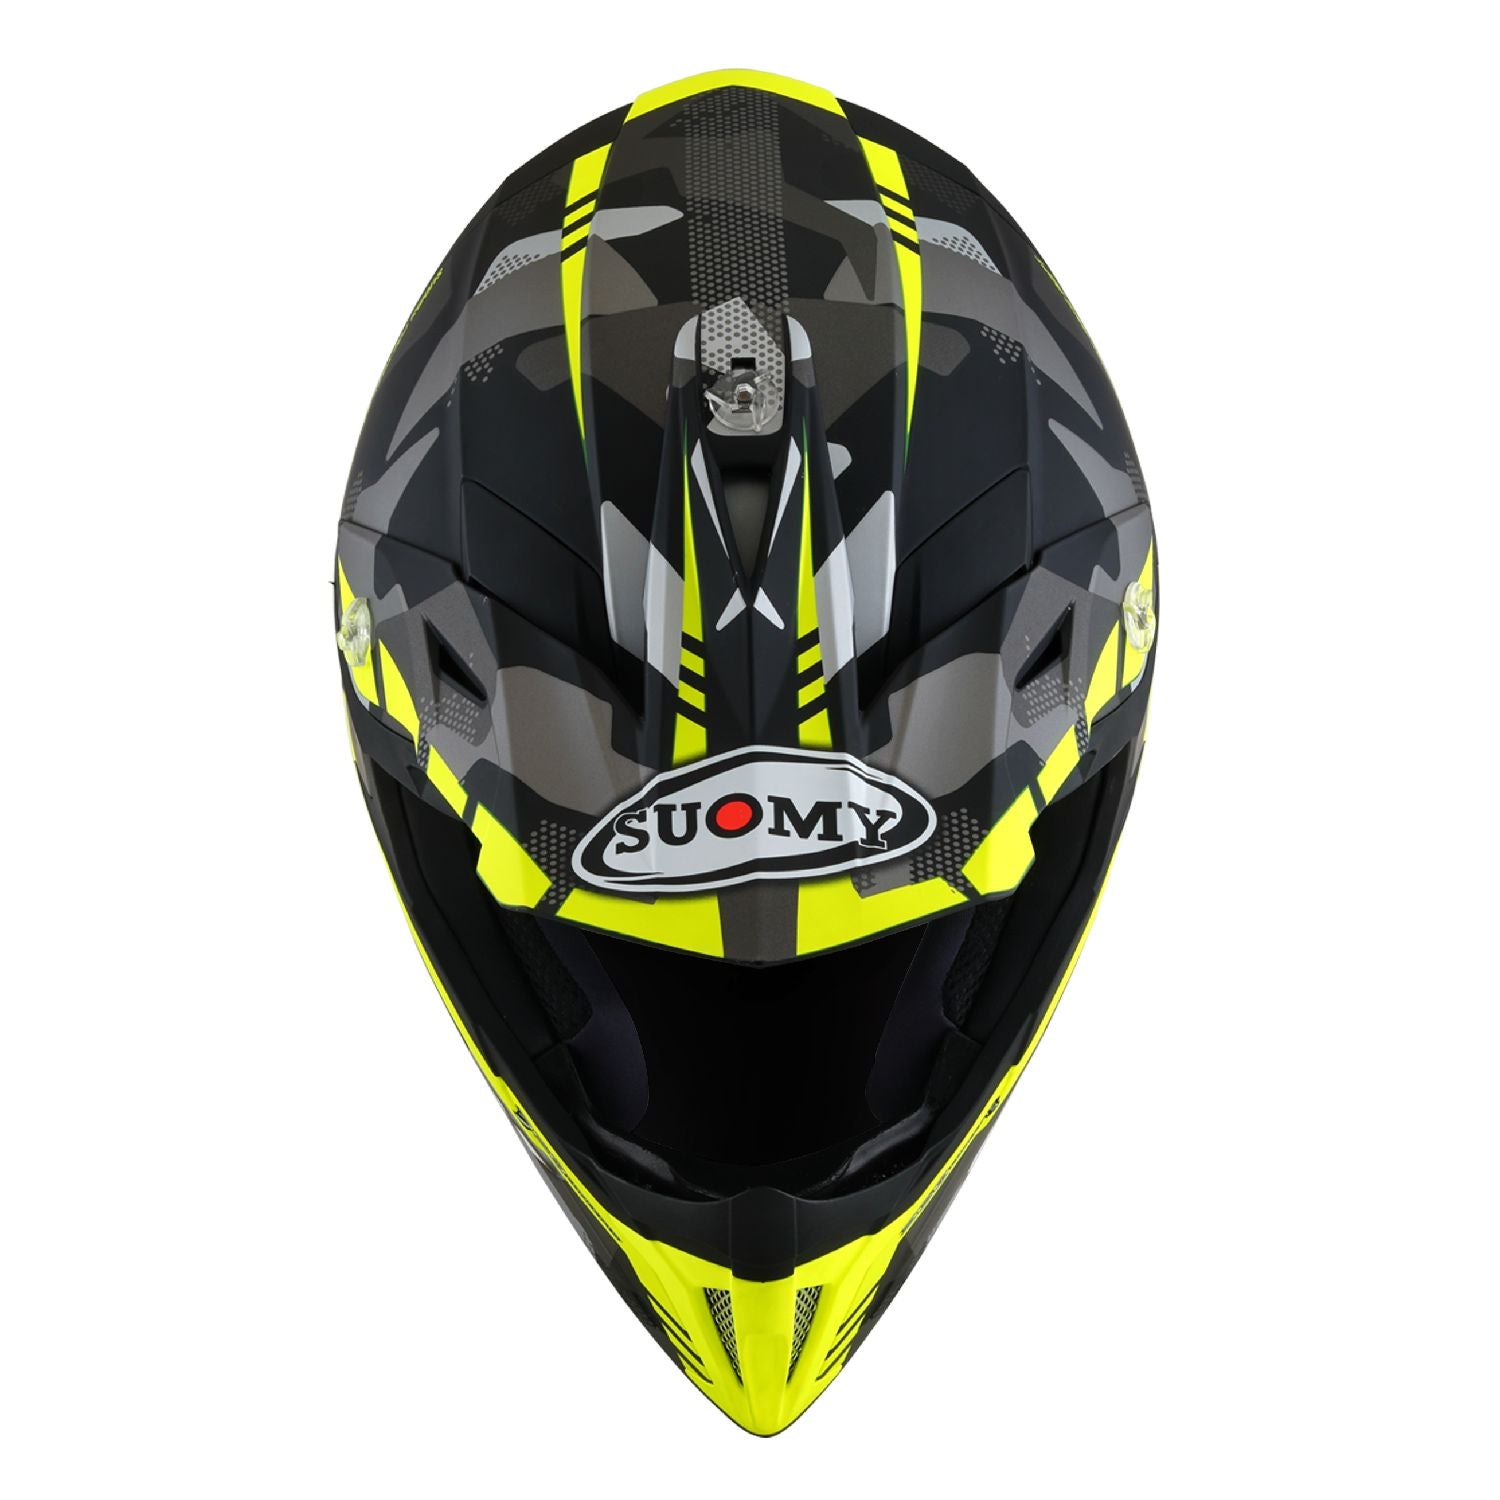 Suomy X-Wing Camo Off Road Motorcycle Helmet (XS - 2XL)